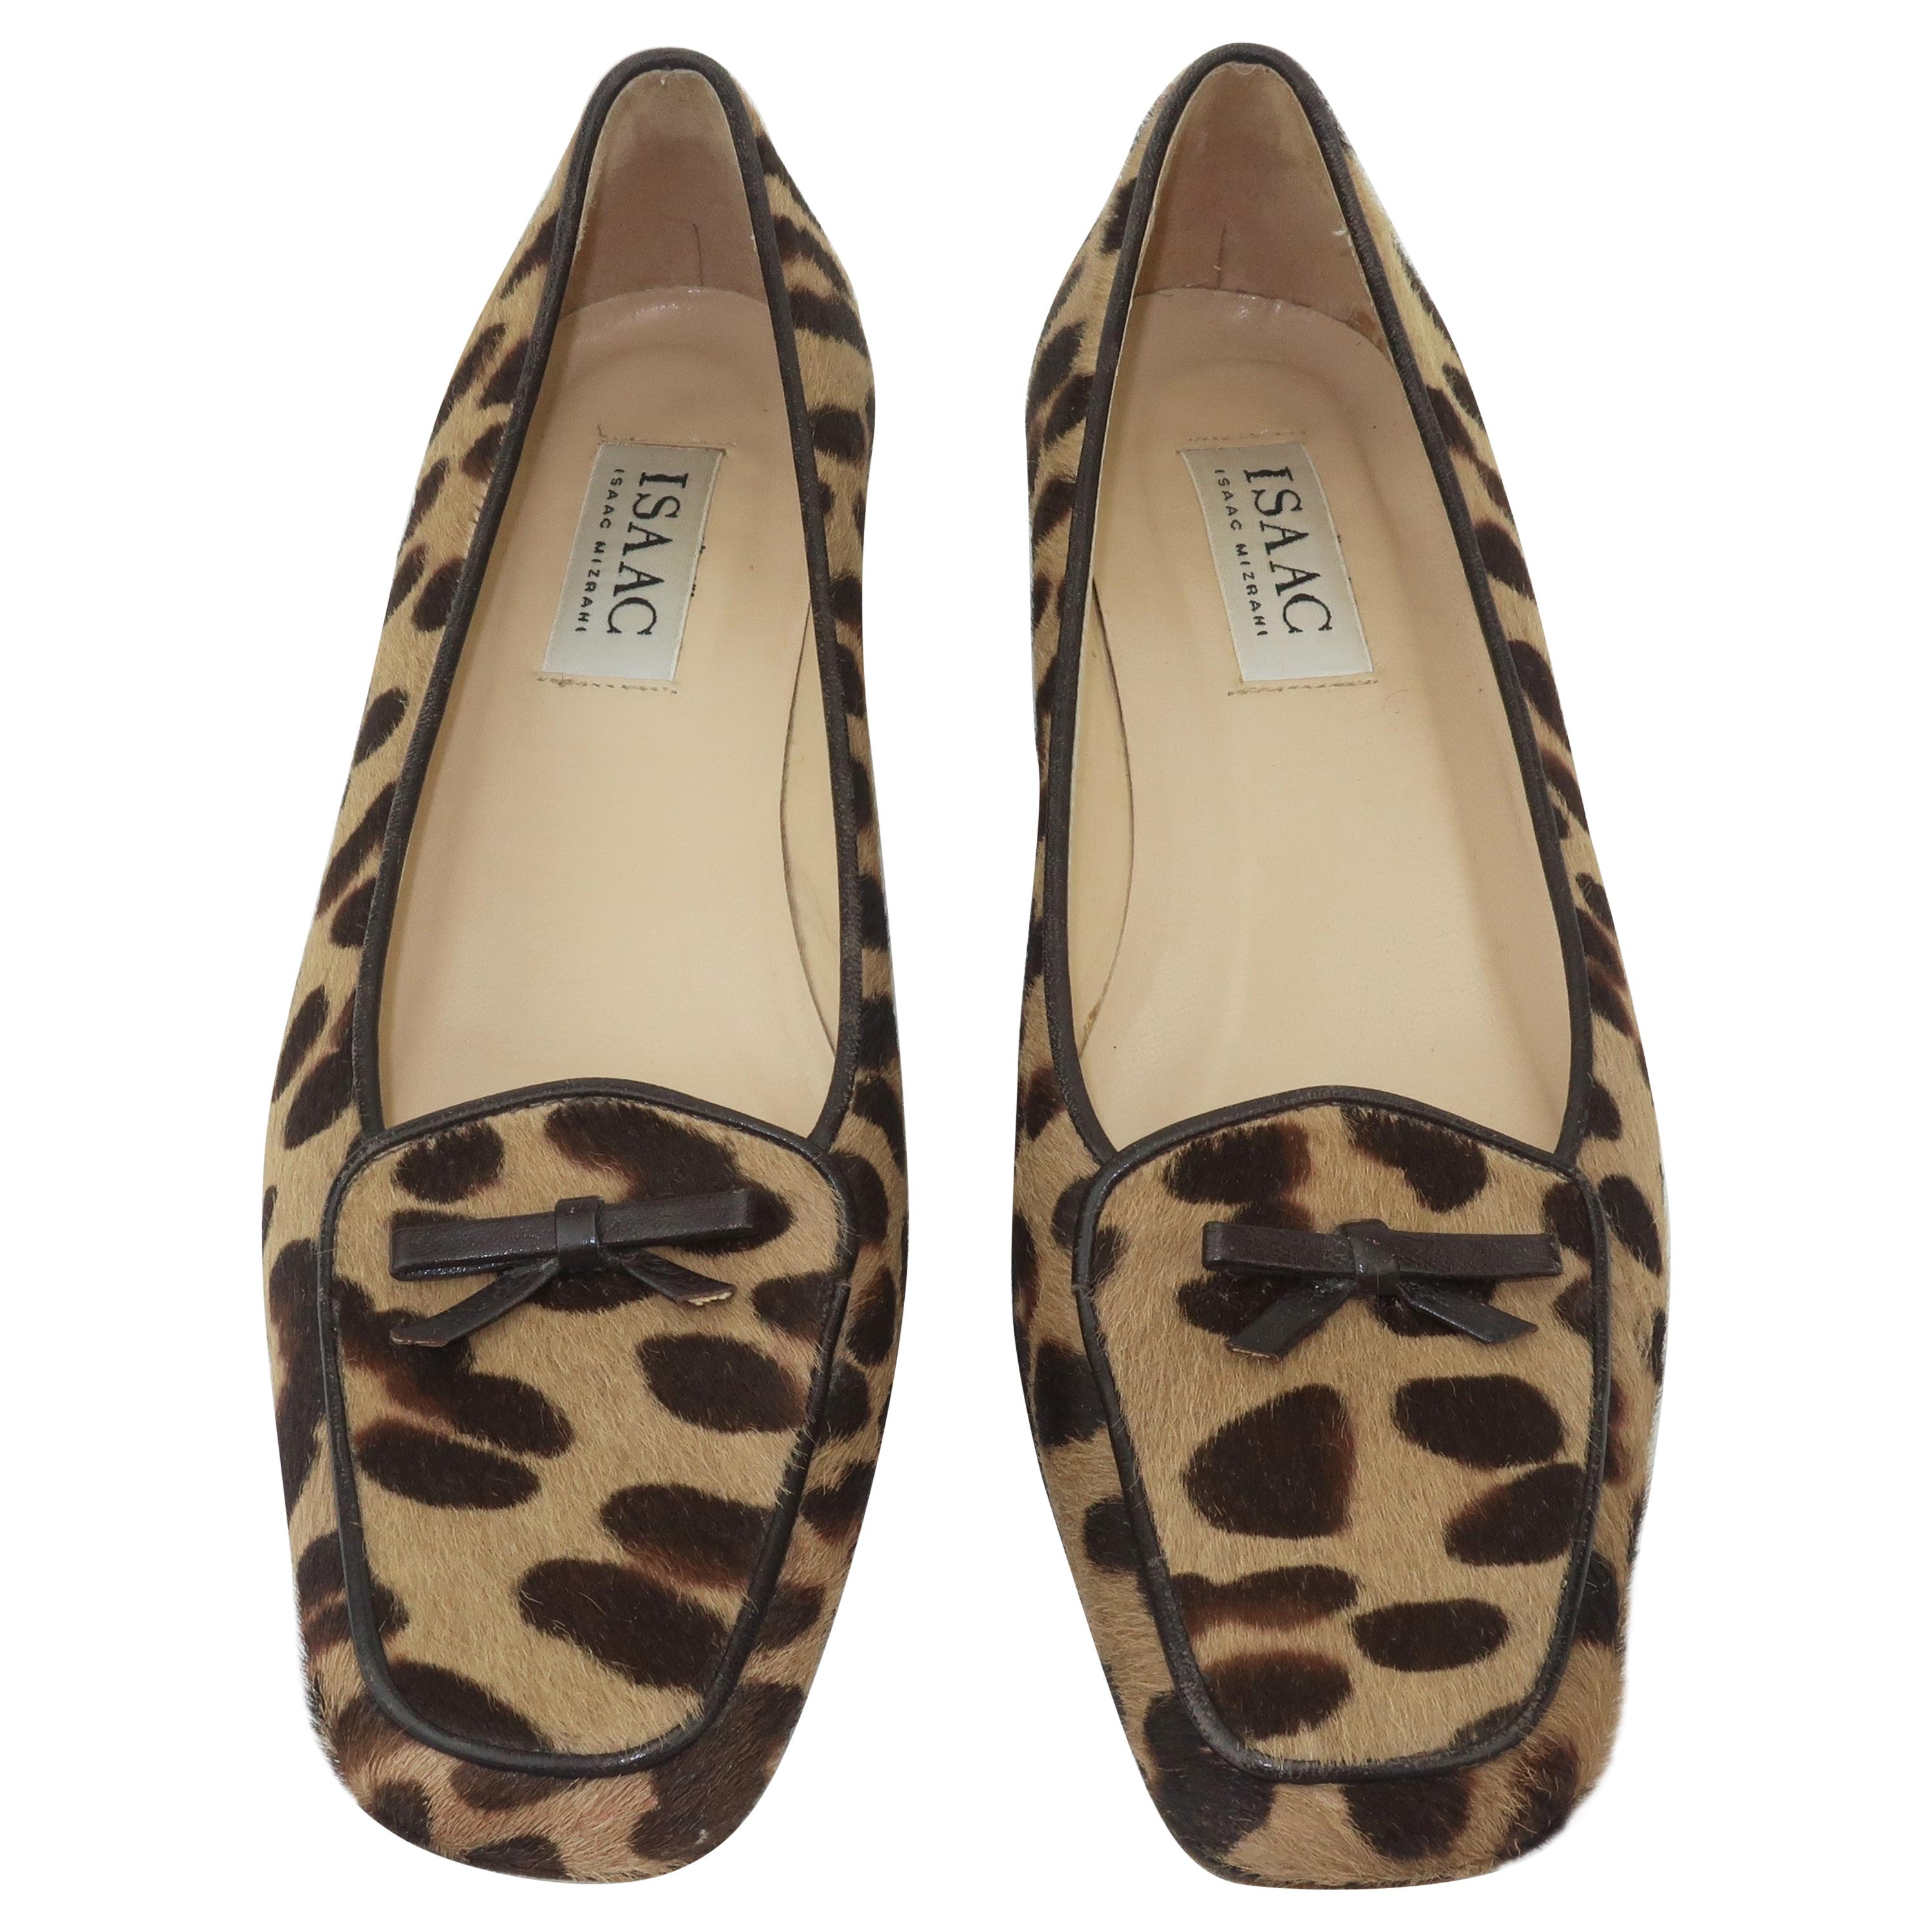 Isaac Mizrahi Animal Leopard Print Fur Loafer Shoes Sz 7 1/2 M